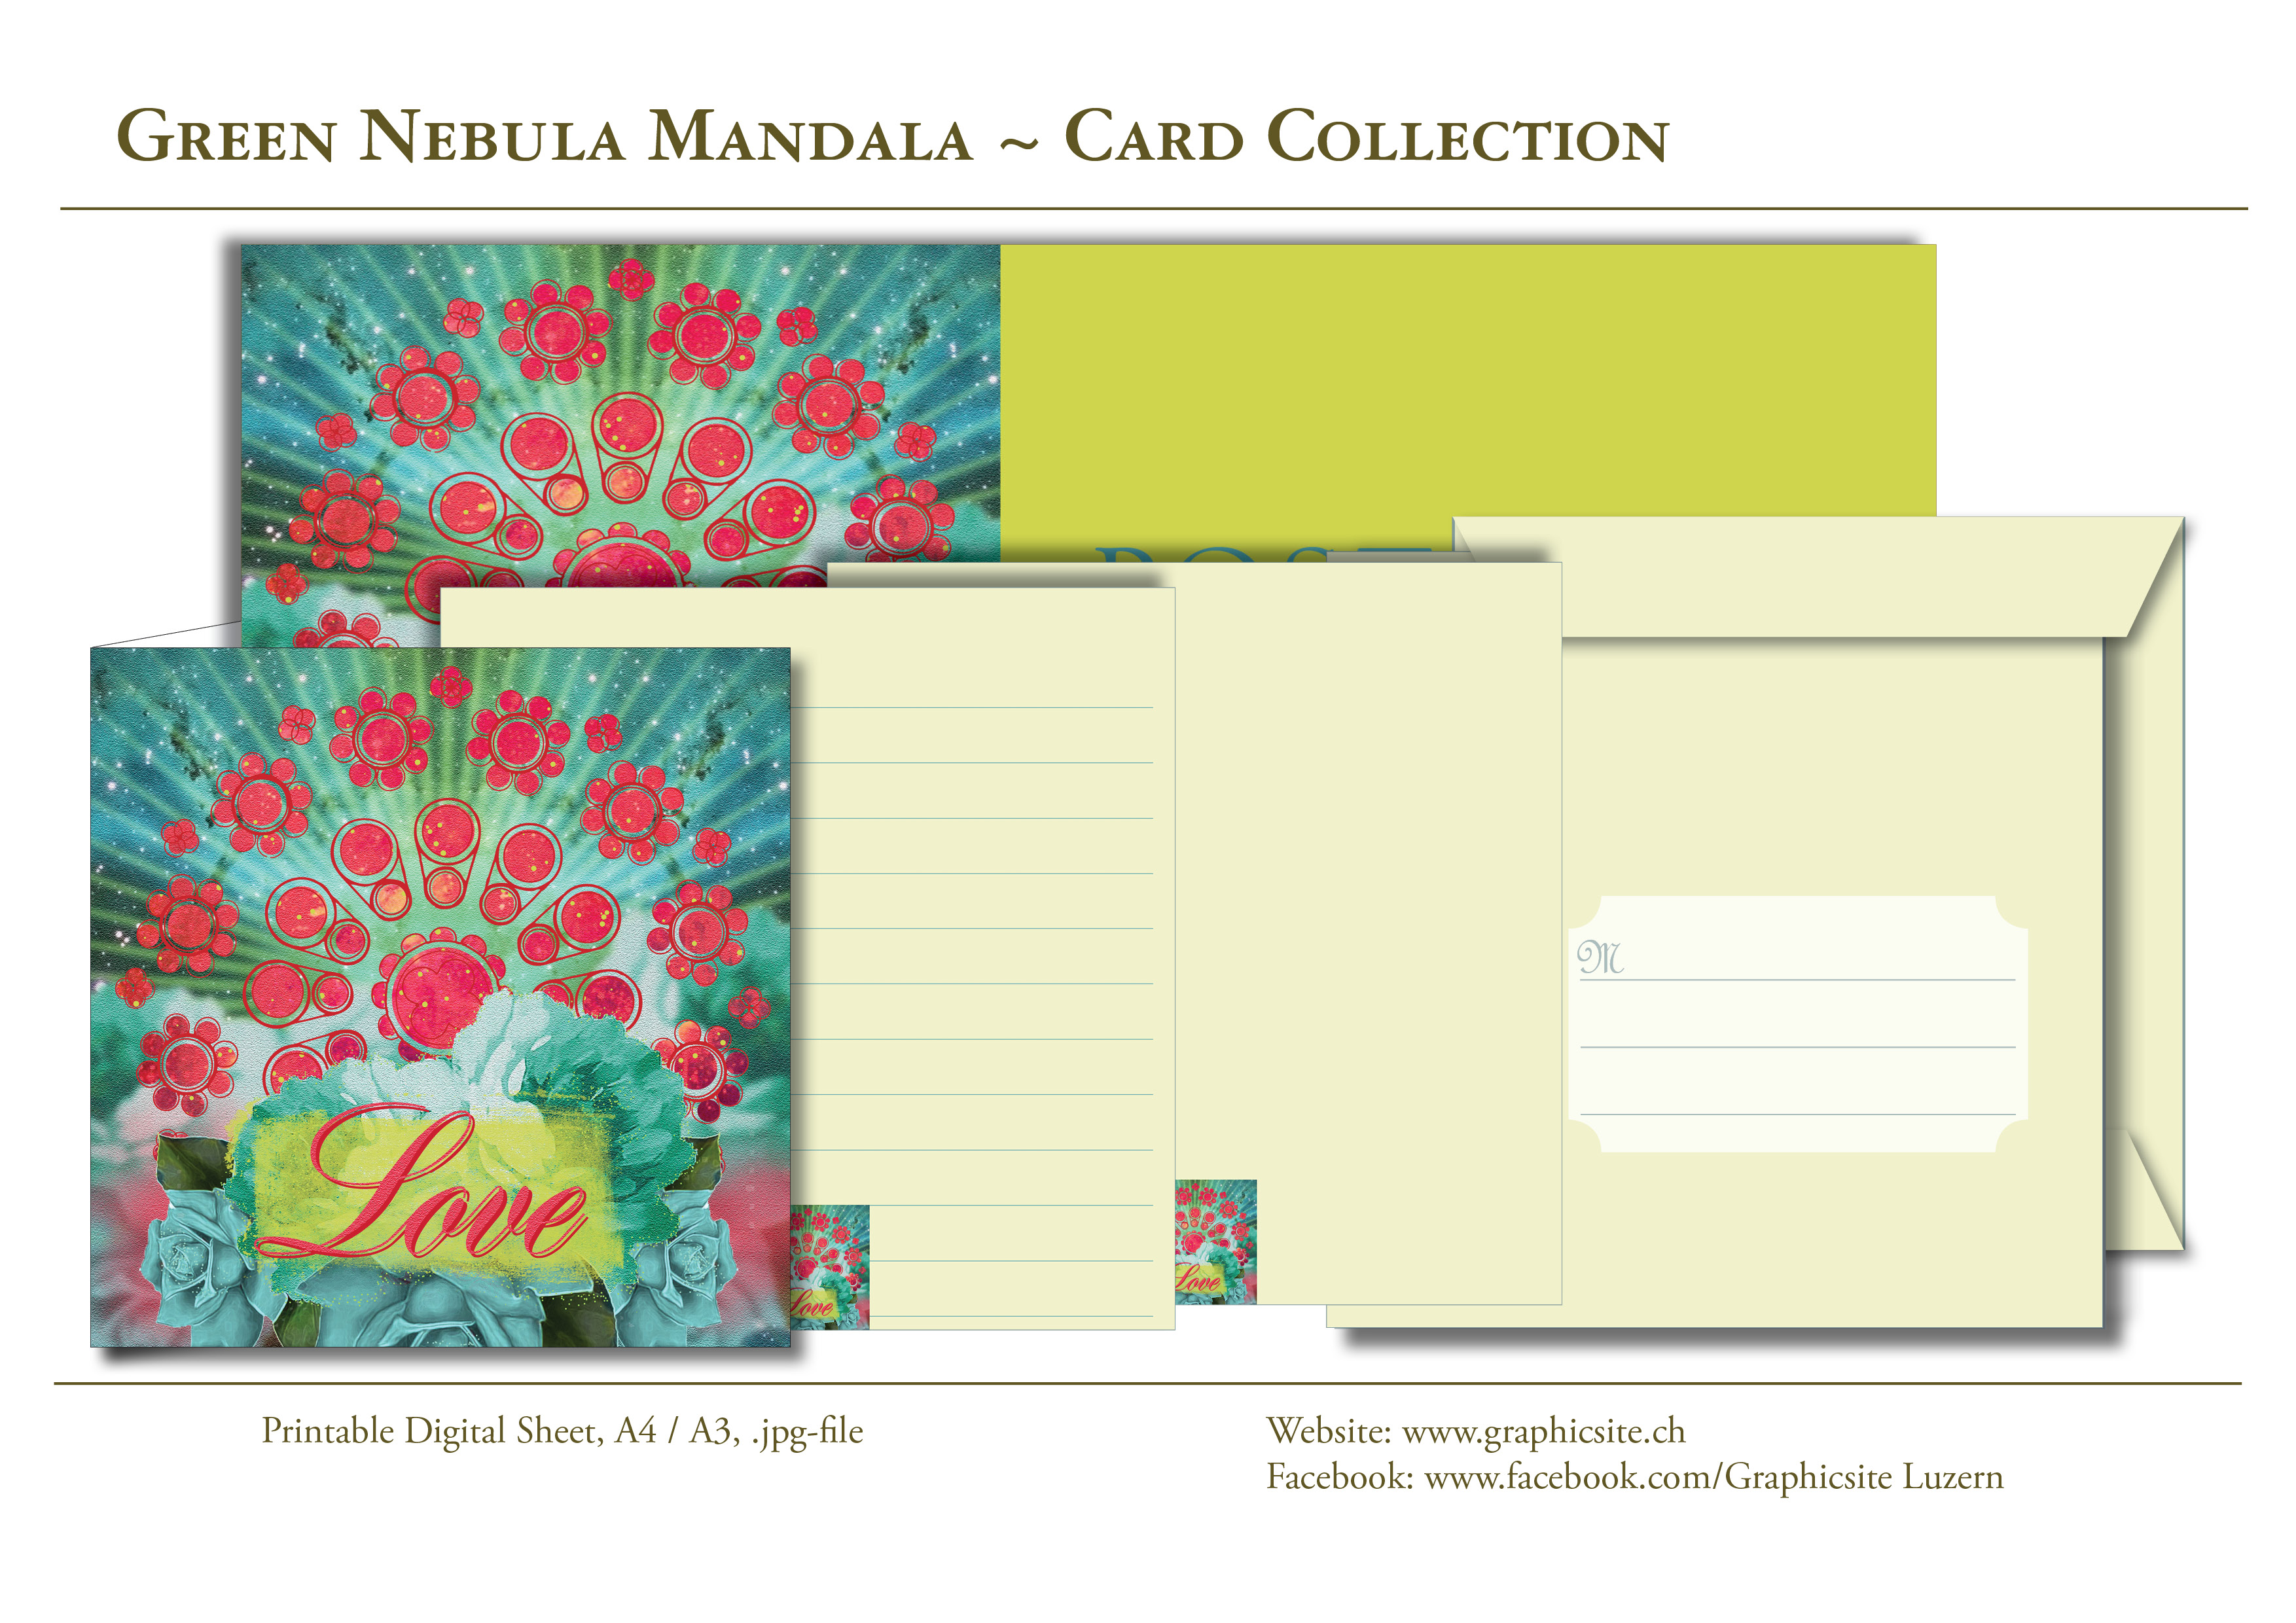 Printable Digital Sheets, Cards, Greetingcards, Postcards, Mandala, Love, Stars, Nebula, Green, Red,